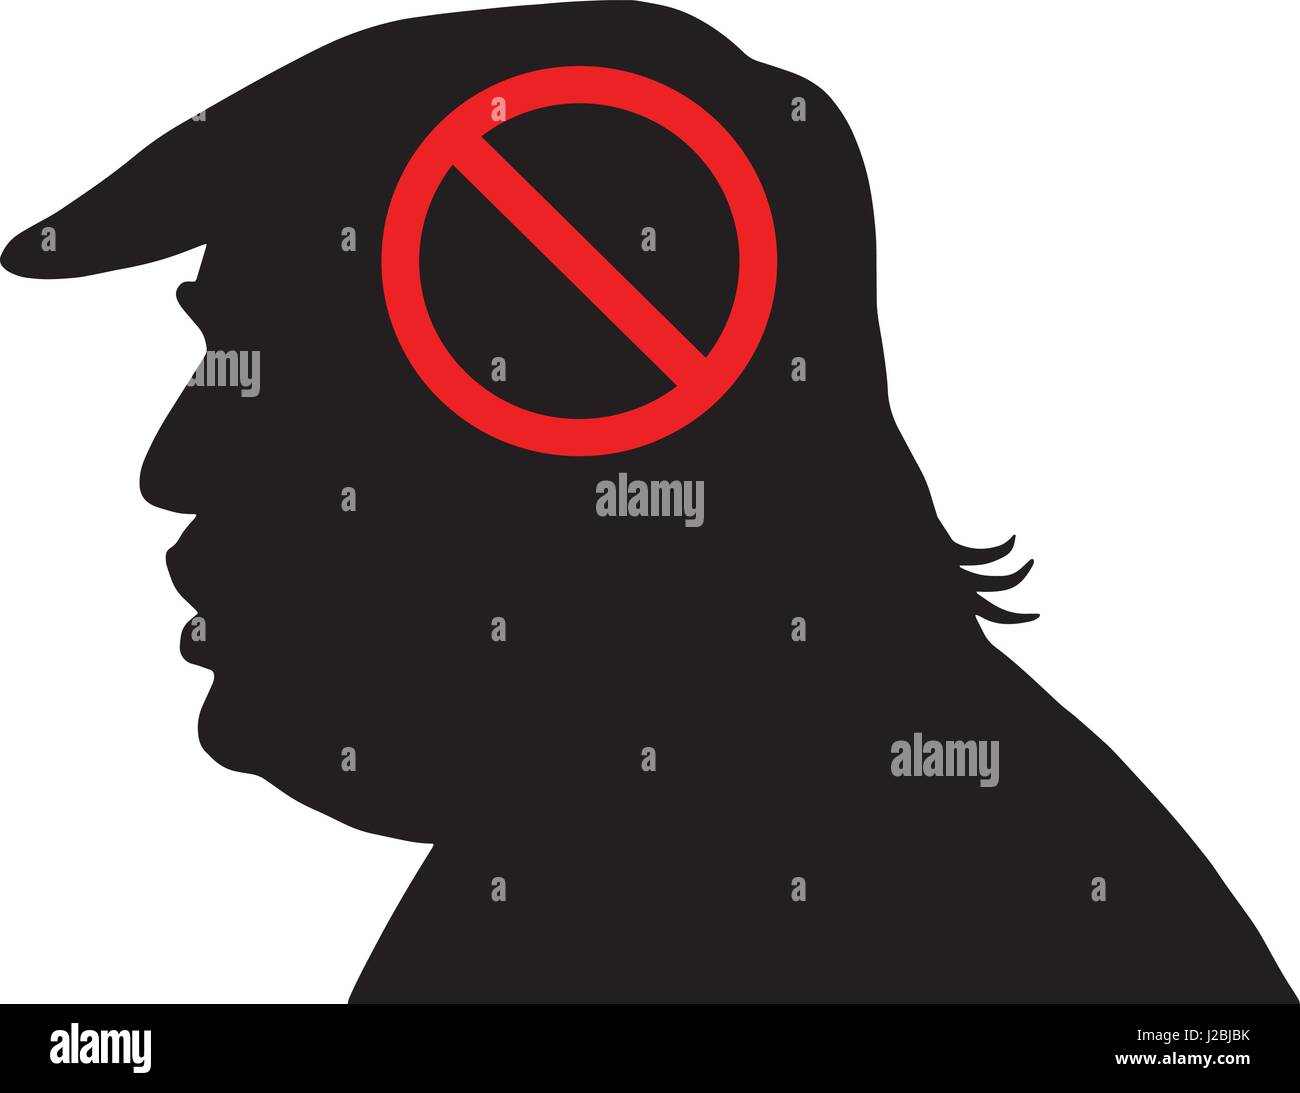 Donald Trump Silhouette mit Anti-Zeichen. Vektorgrafik-Symbol Stock Vektor